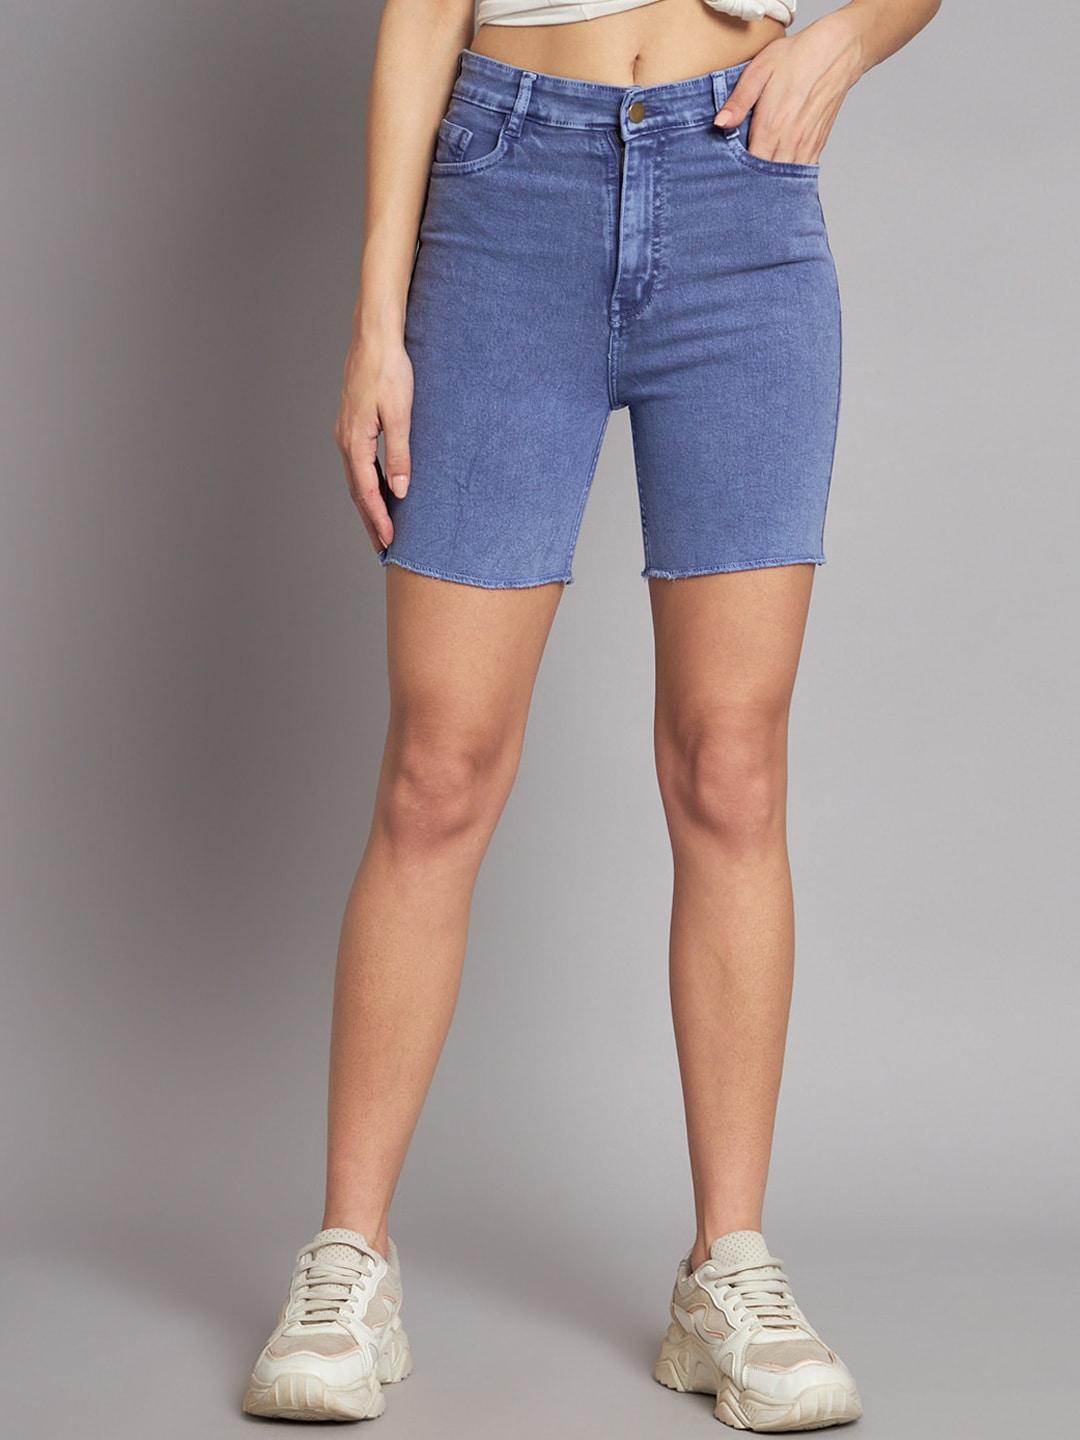 guti-women-washed-high-rise-denim-shorts